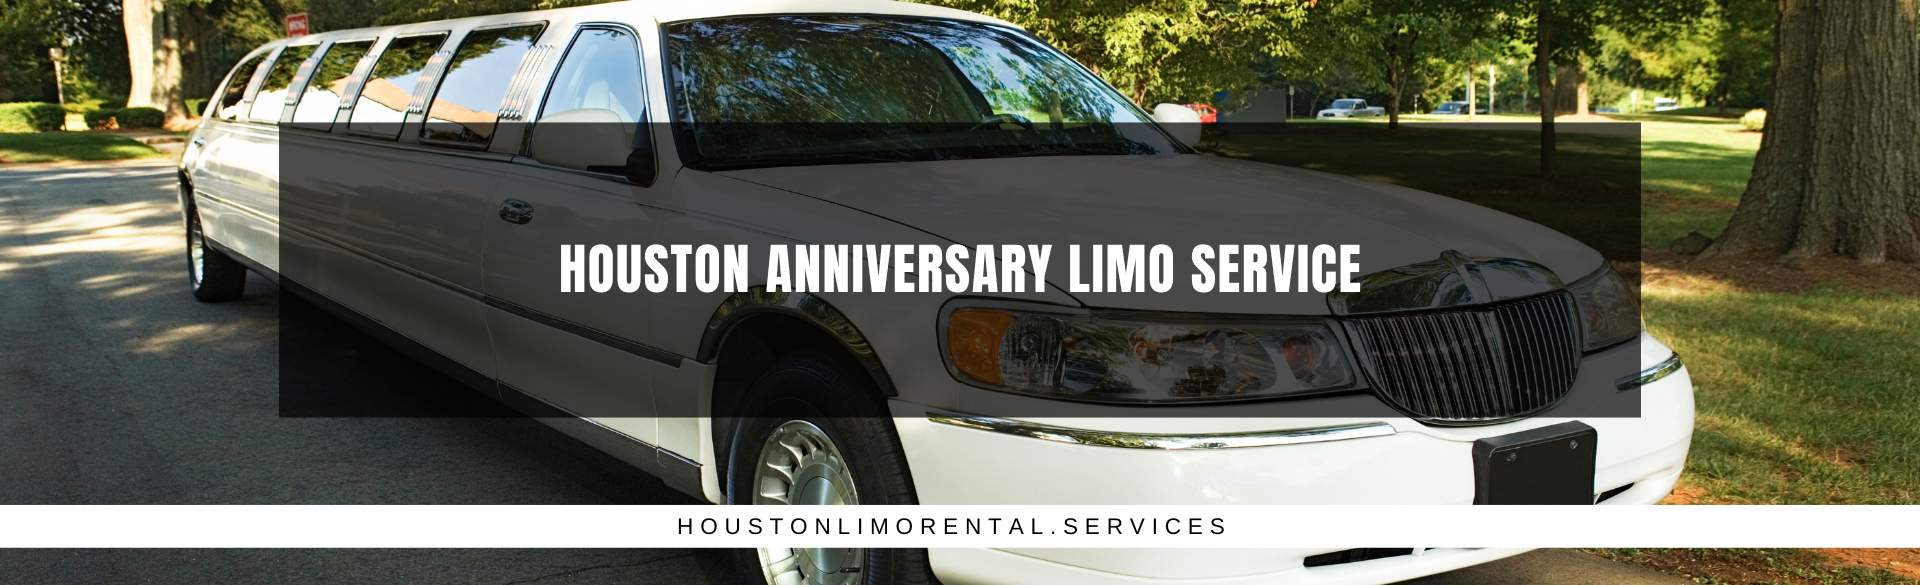 Houston Anniversary Limo Service